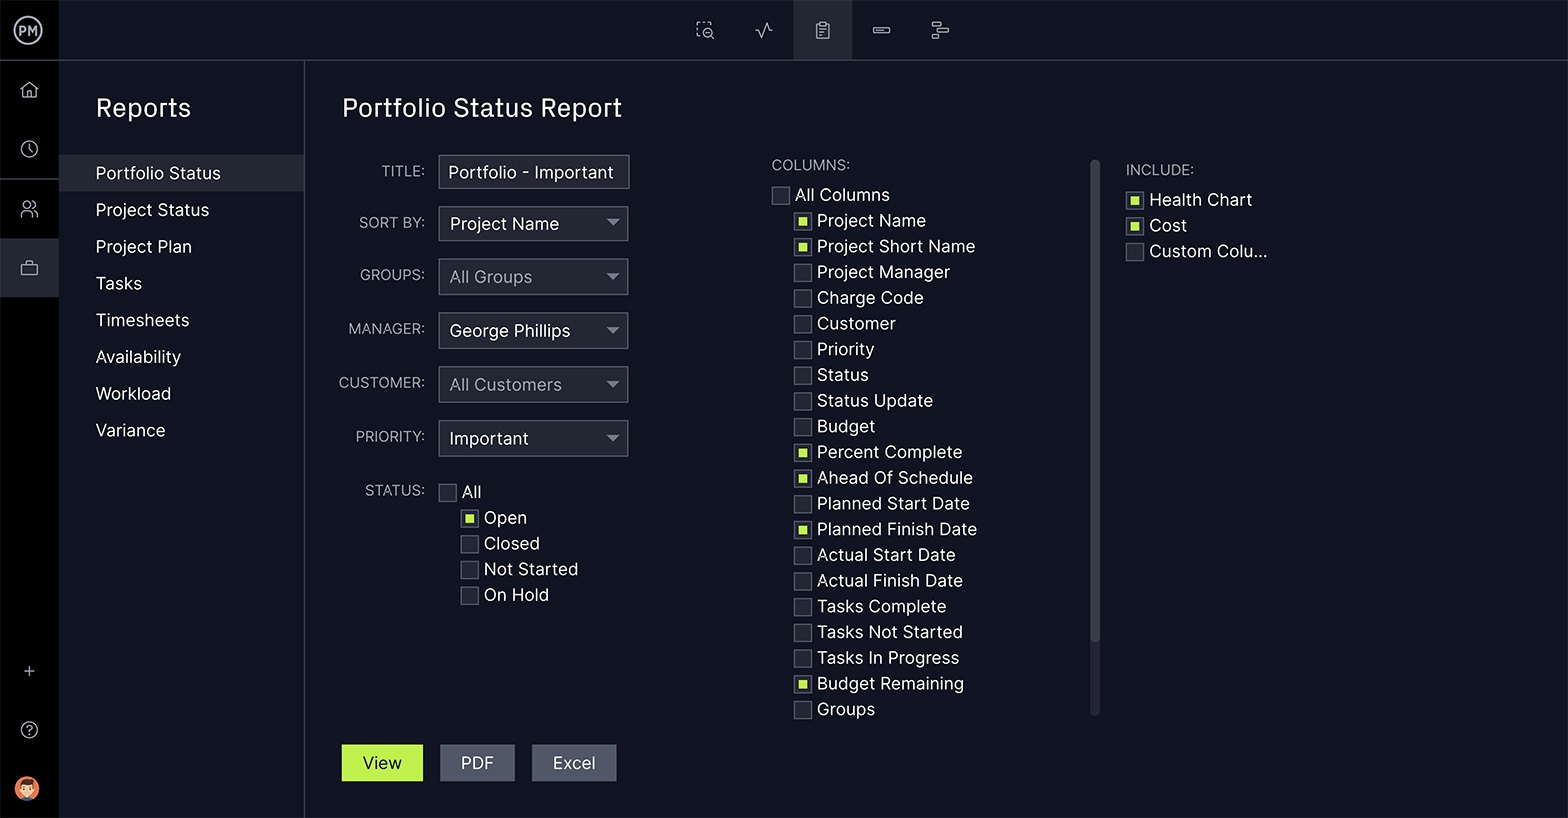 ProjectManager's portfolio status report filter